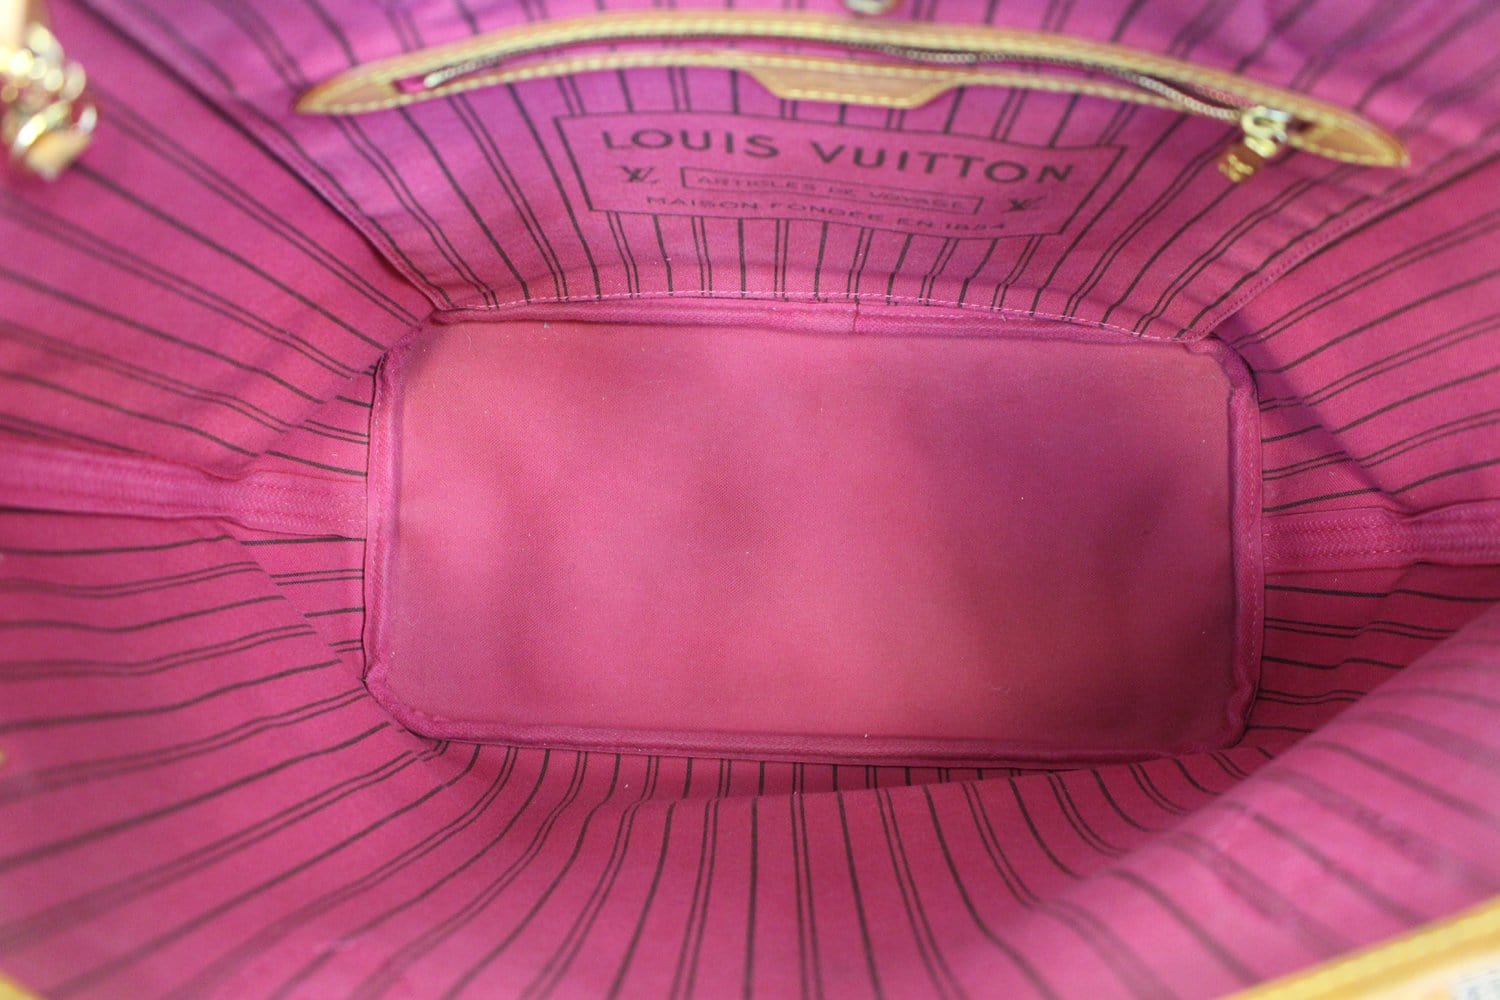 Louis Vuitton Bag Pink Inside